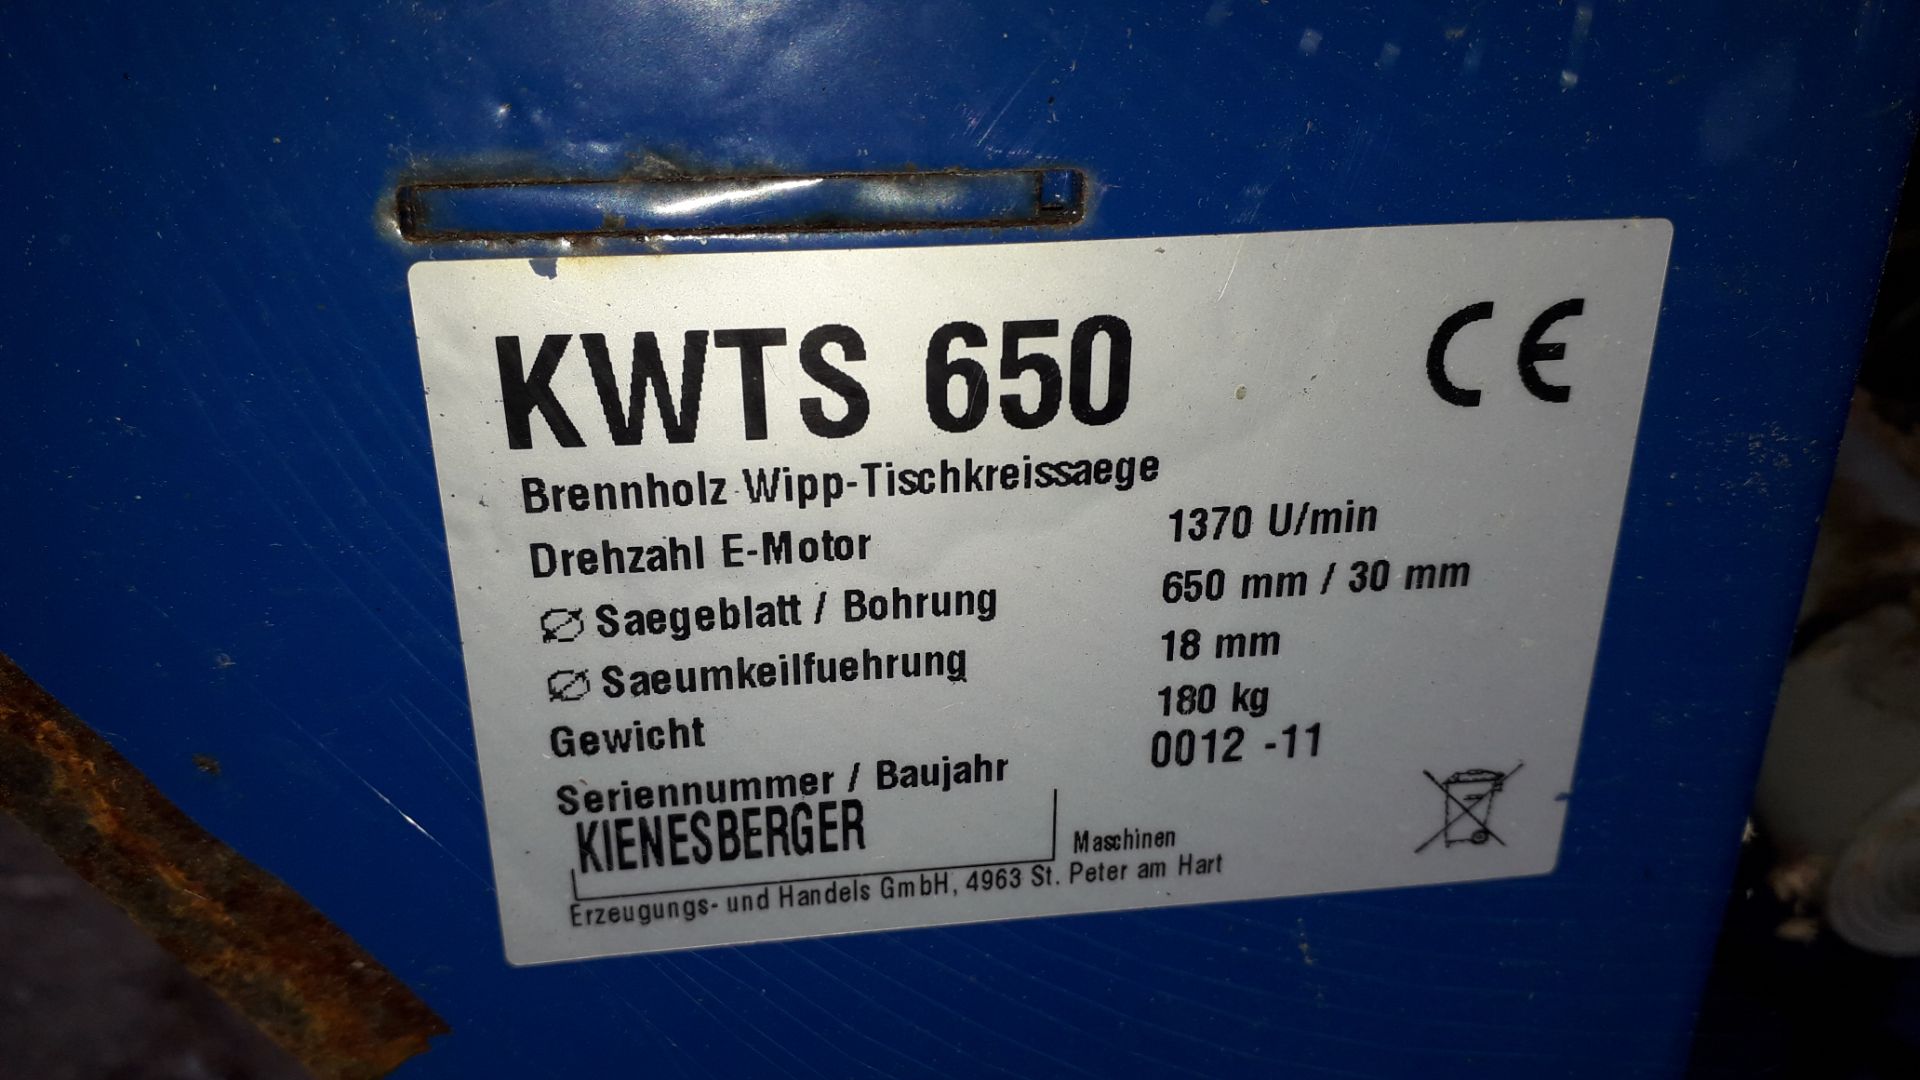 Kiensberger KWTS 650 Mobile Saw Bench (Nov 2012) - Image 5 of 5